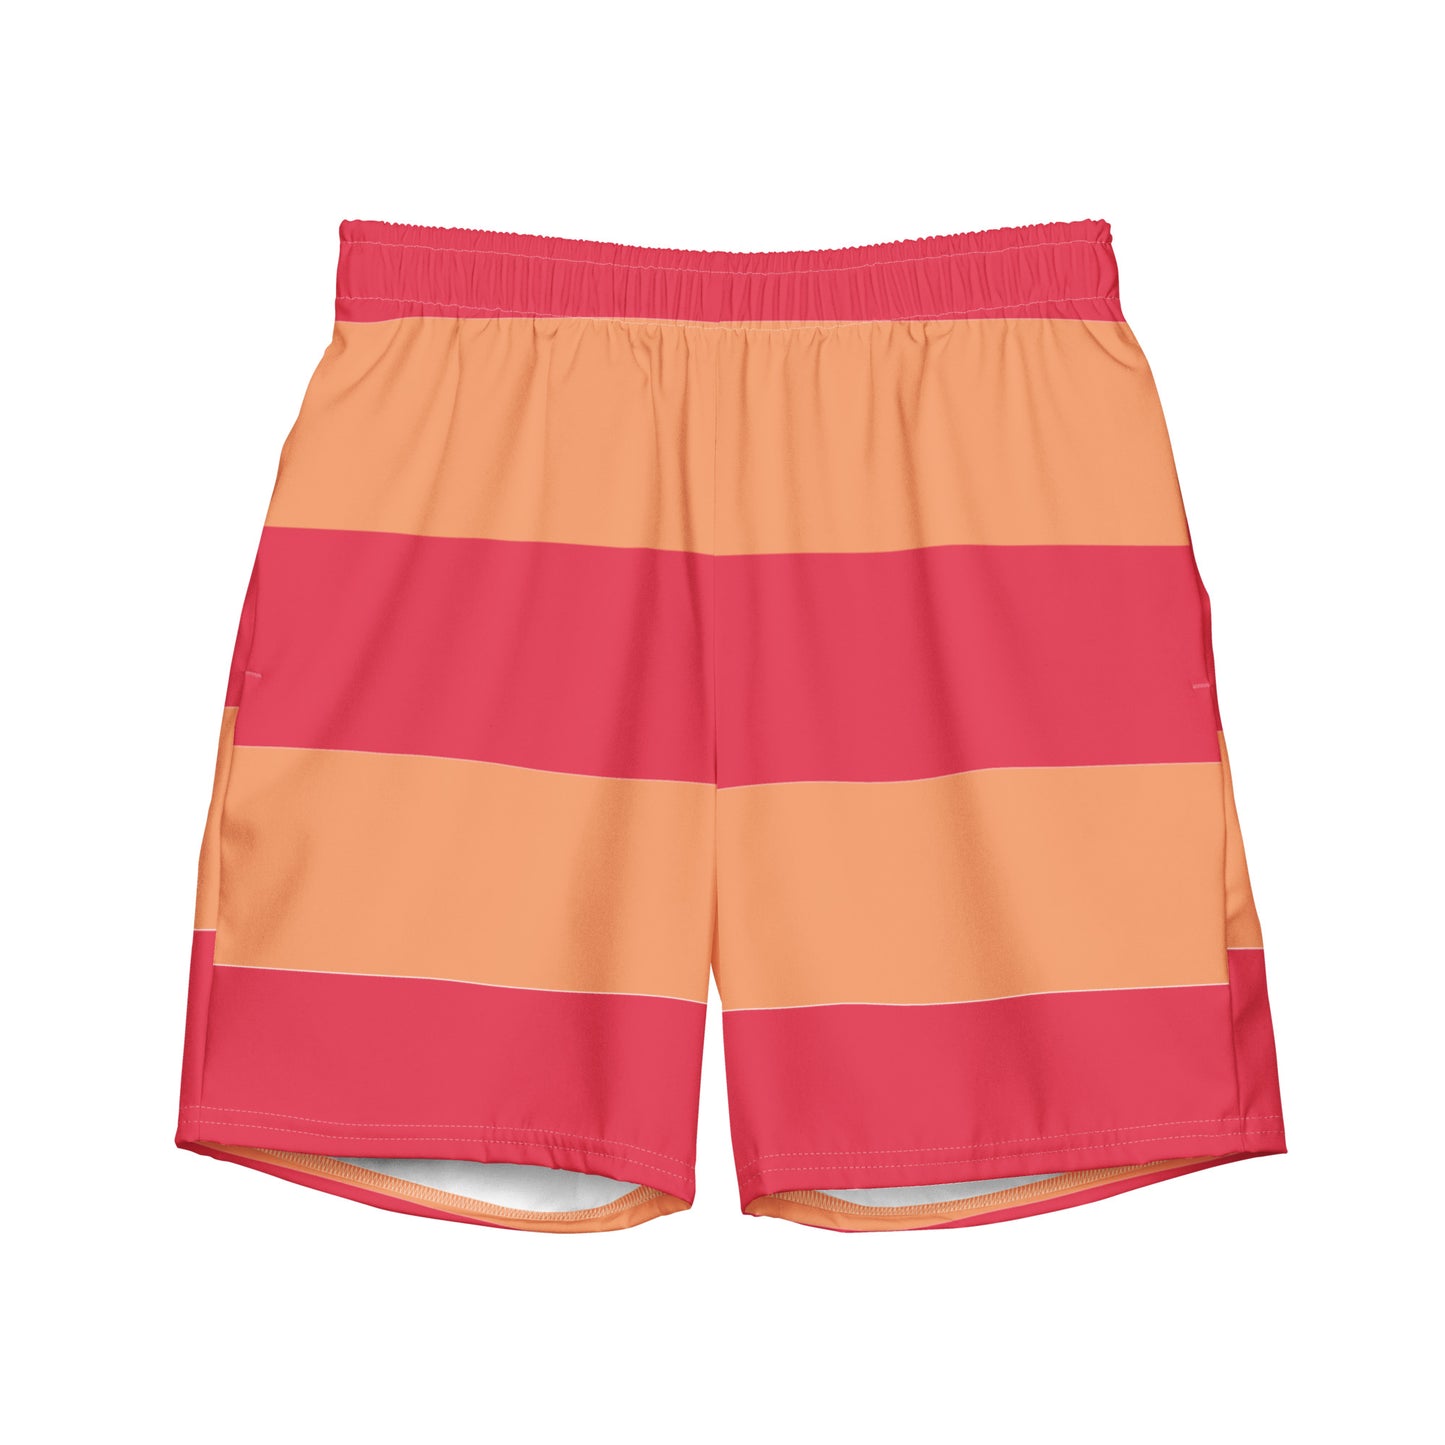 Red Orange Stripes - Sustainably Made Men's swim trunks